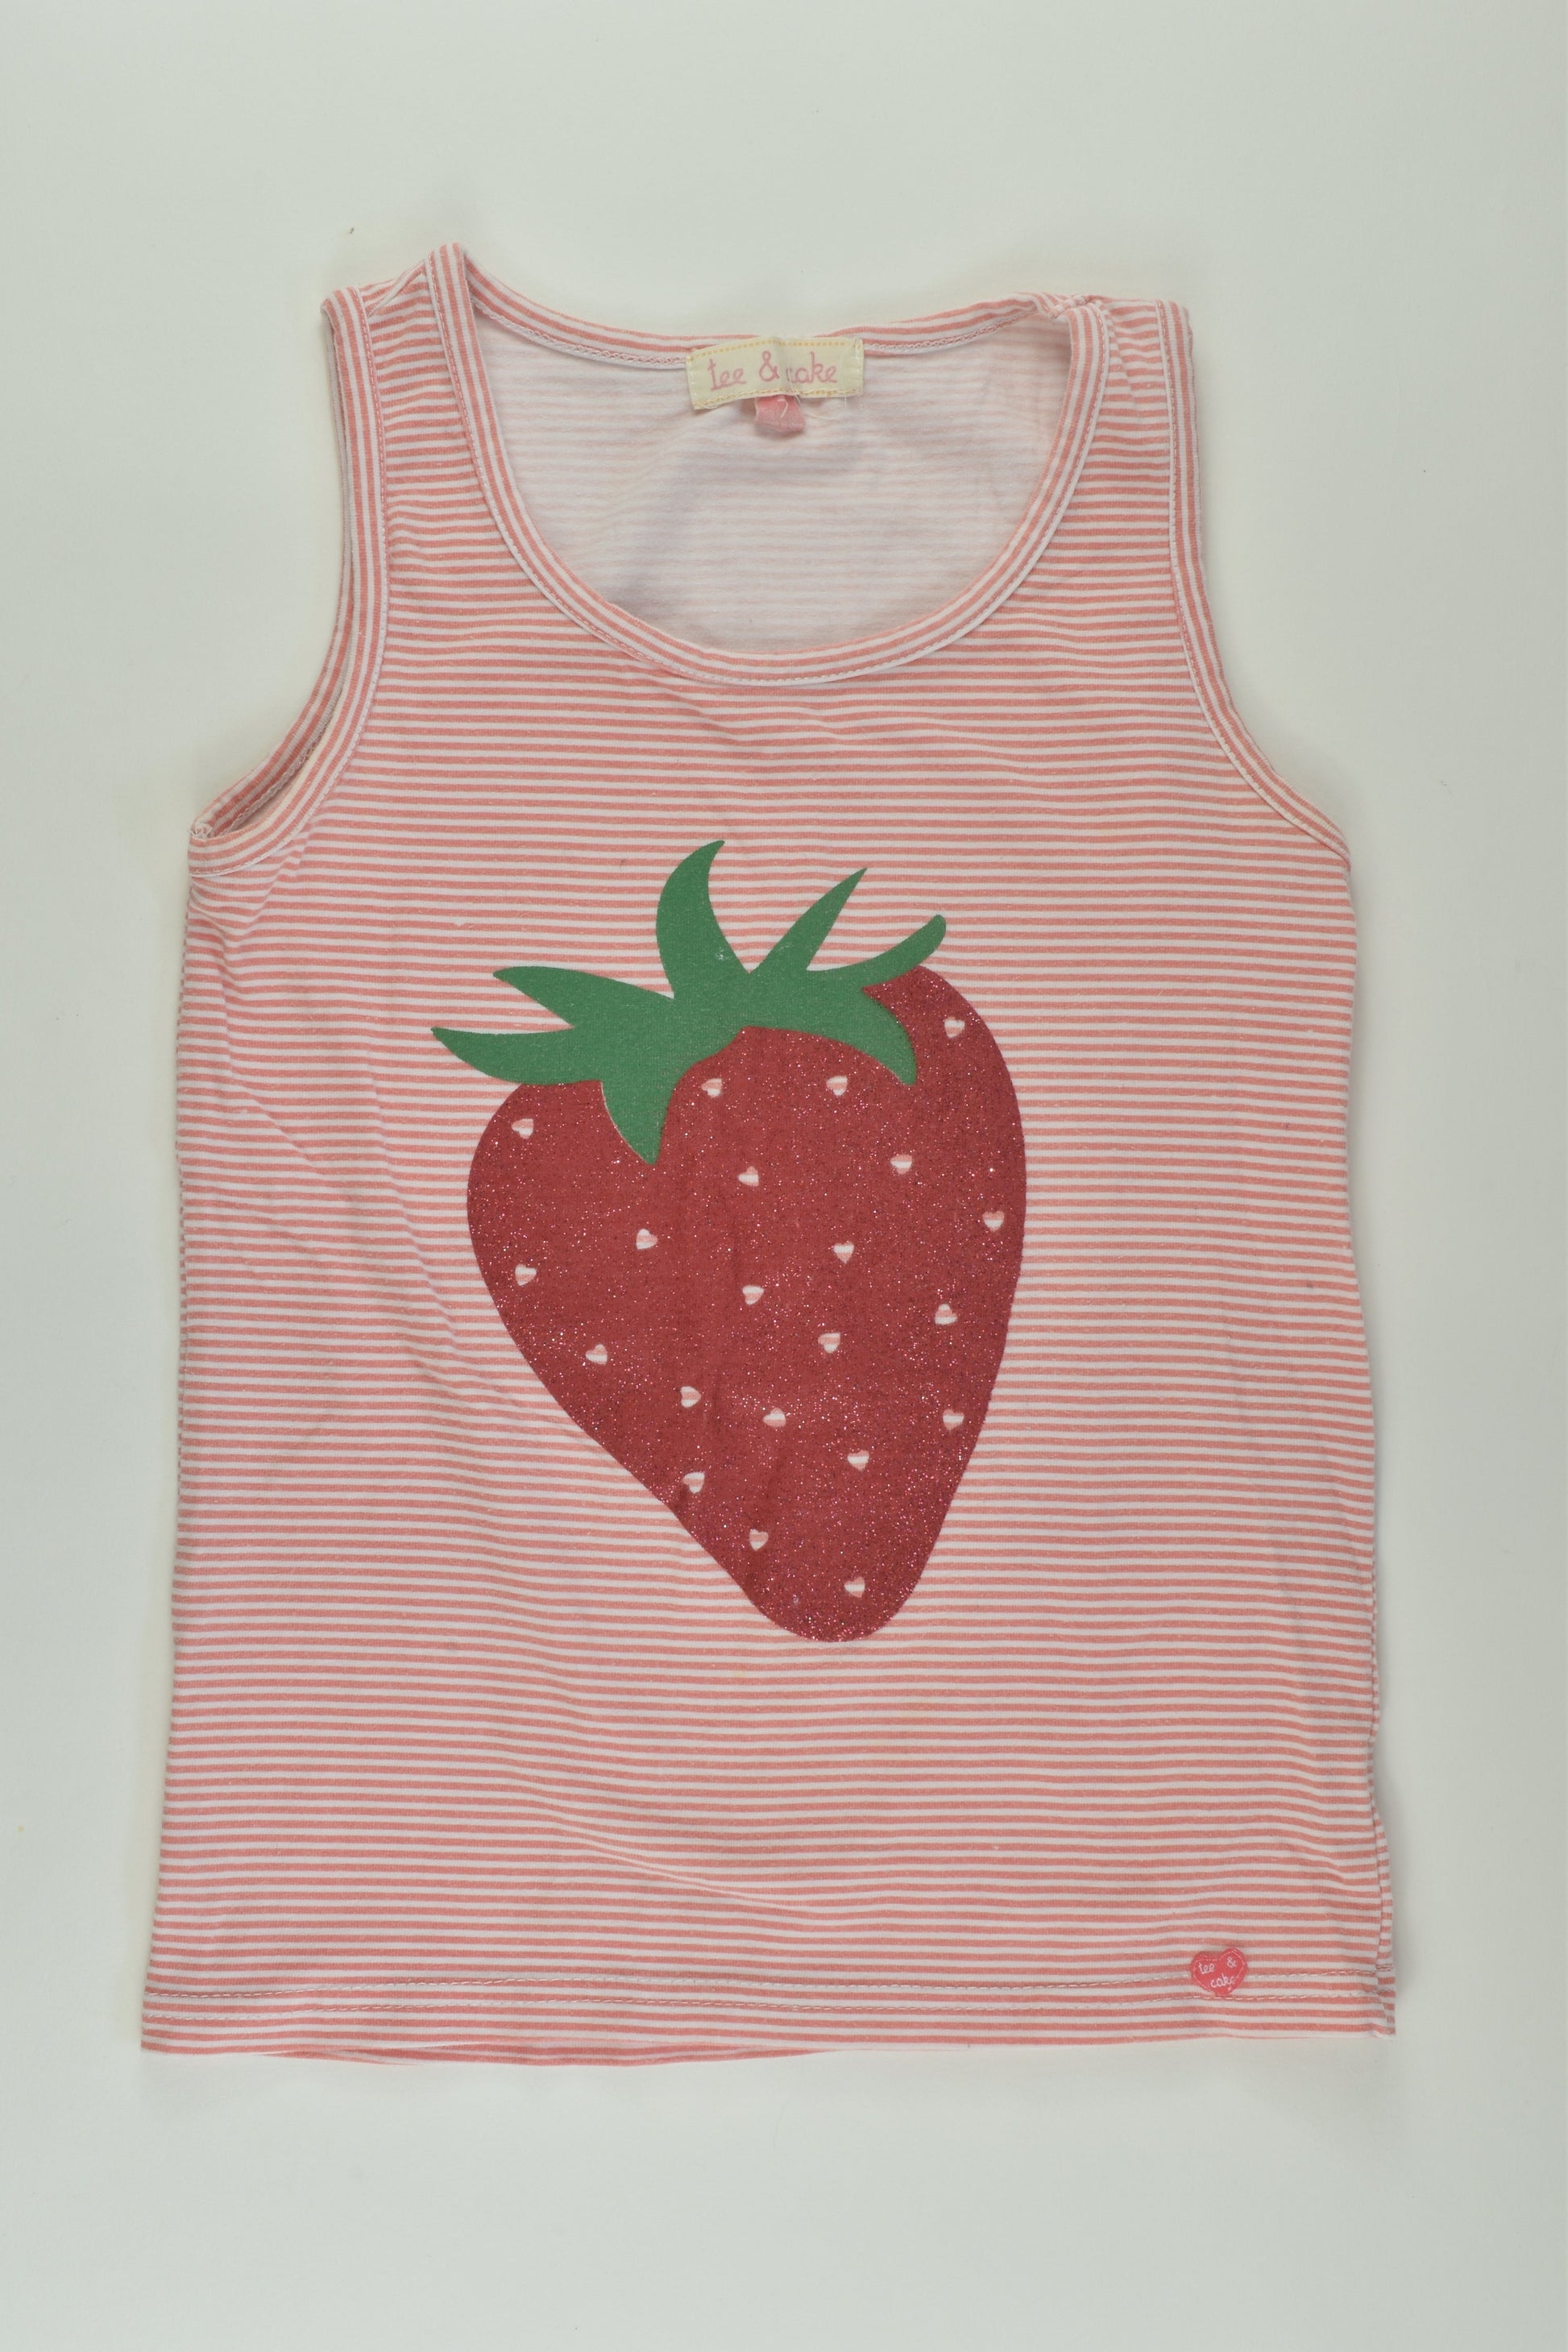 Tee & Cake Size 7 Strawberry T-shirt